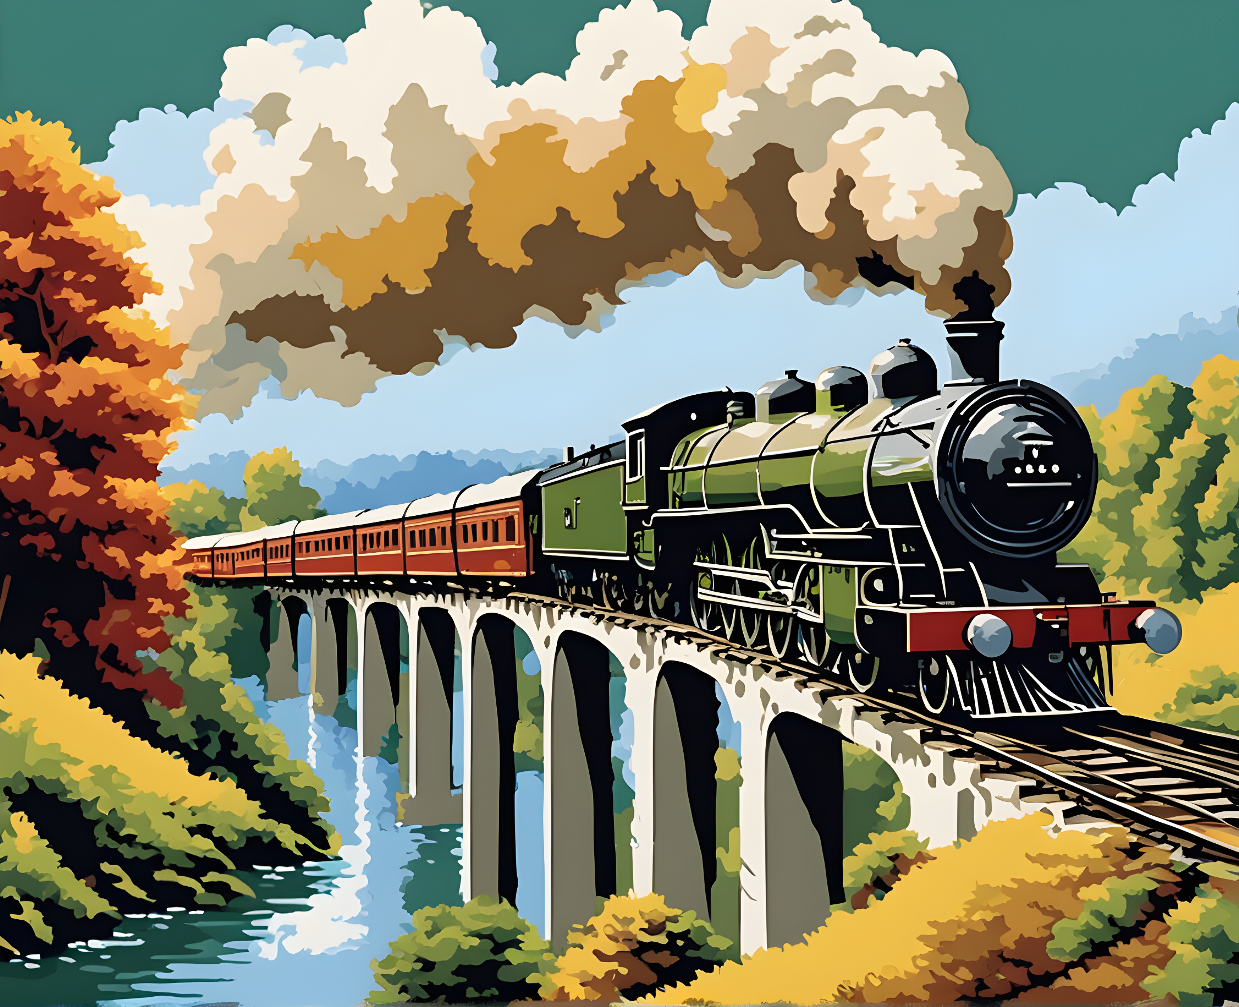 Vintage Steam Train Passing A Bridge - Van-Go Paint-By-Number Kit